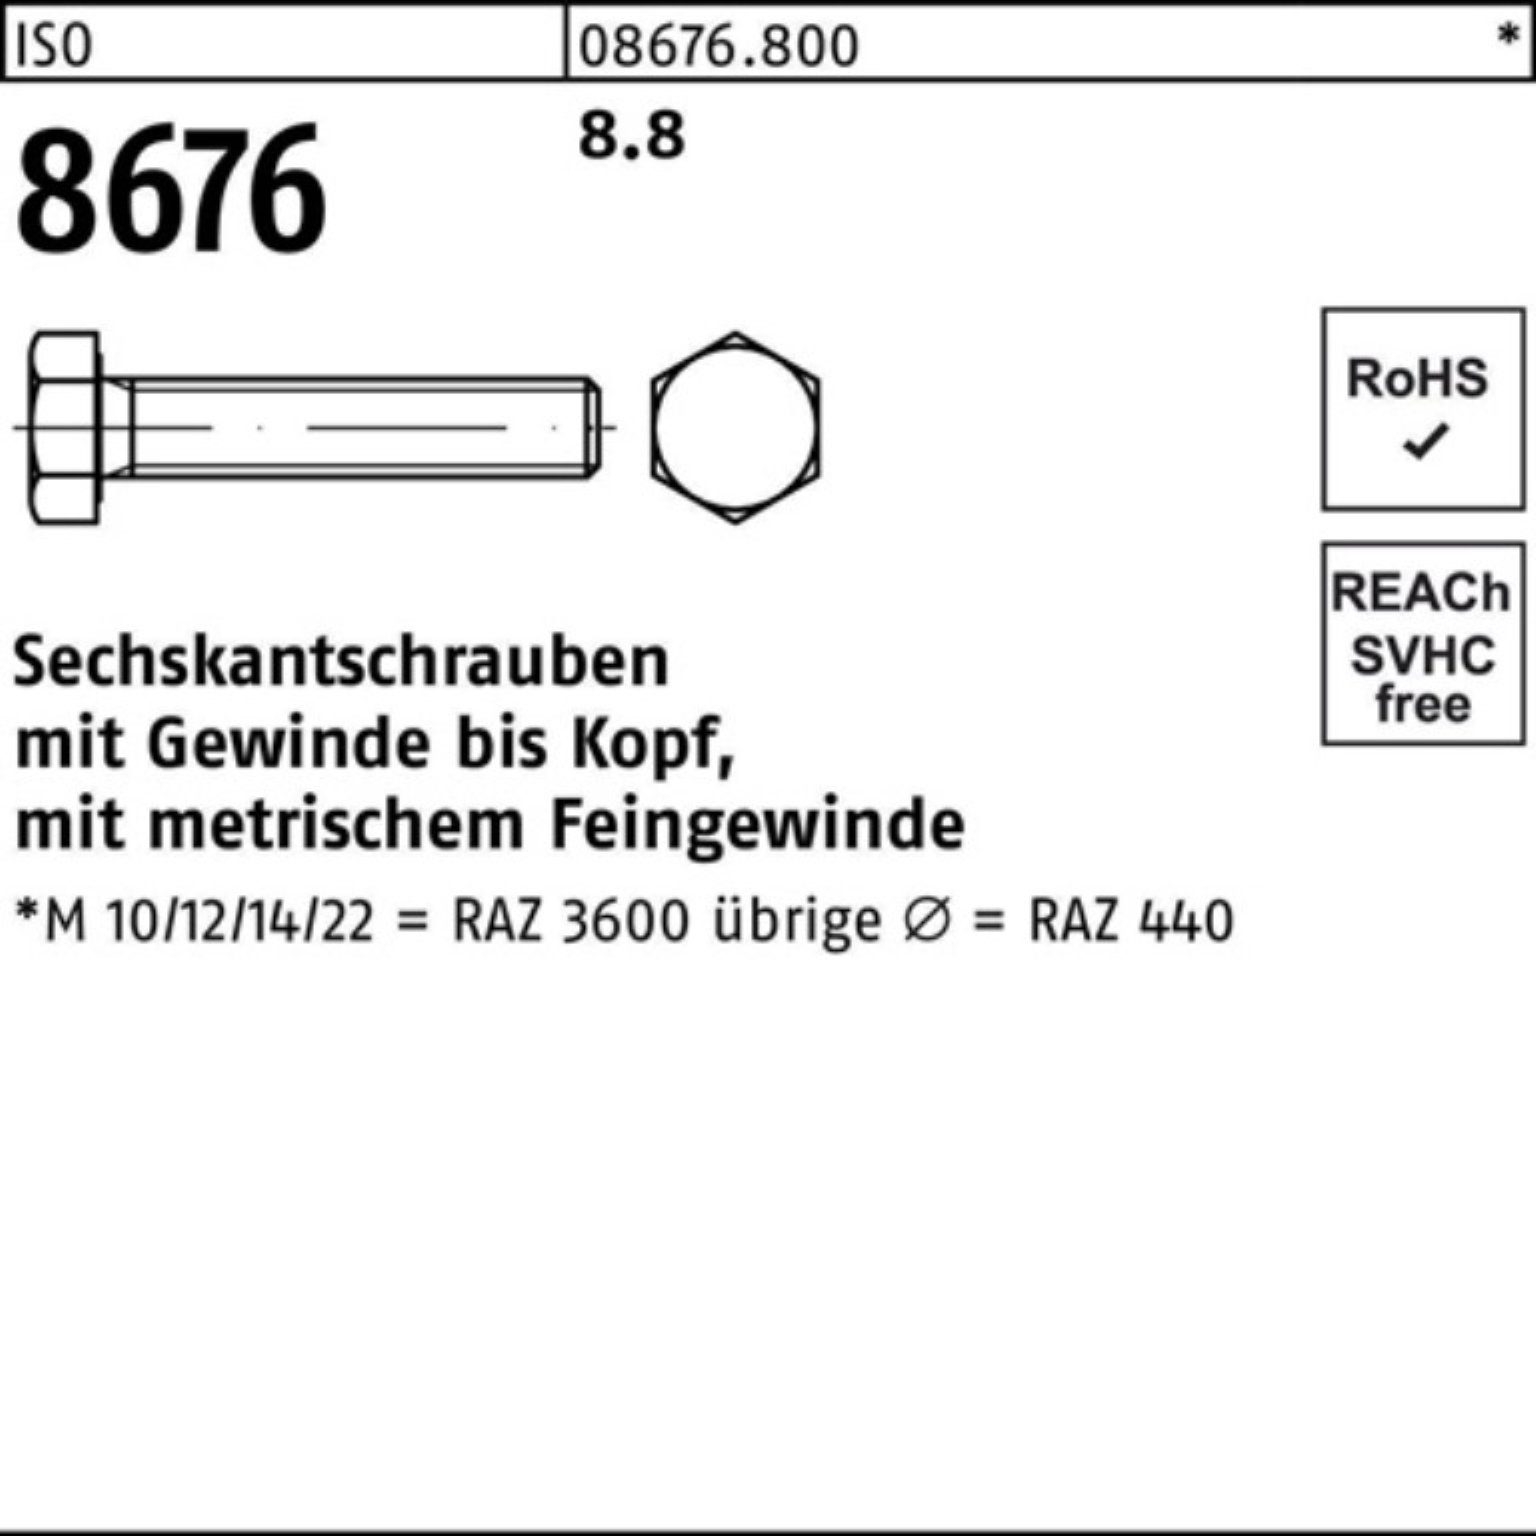 Reyher Sechskantschraube 8.8 1 8676 VG 86 Stück Sechskantschraube 100er M36x3x120 ISO Pack ISO